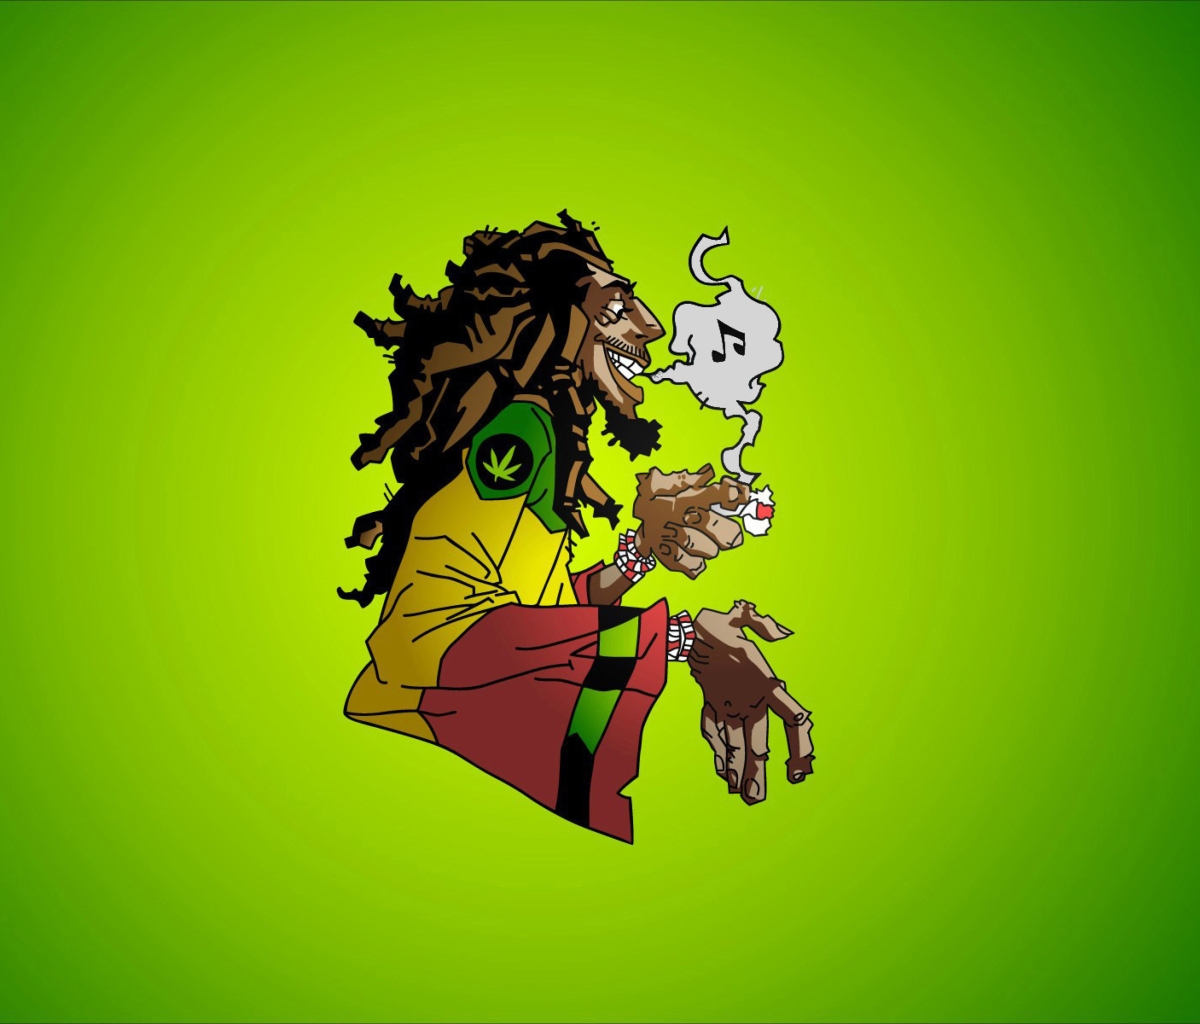 Bob Marley wallpaper 1200x1024